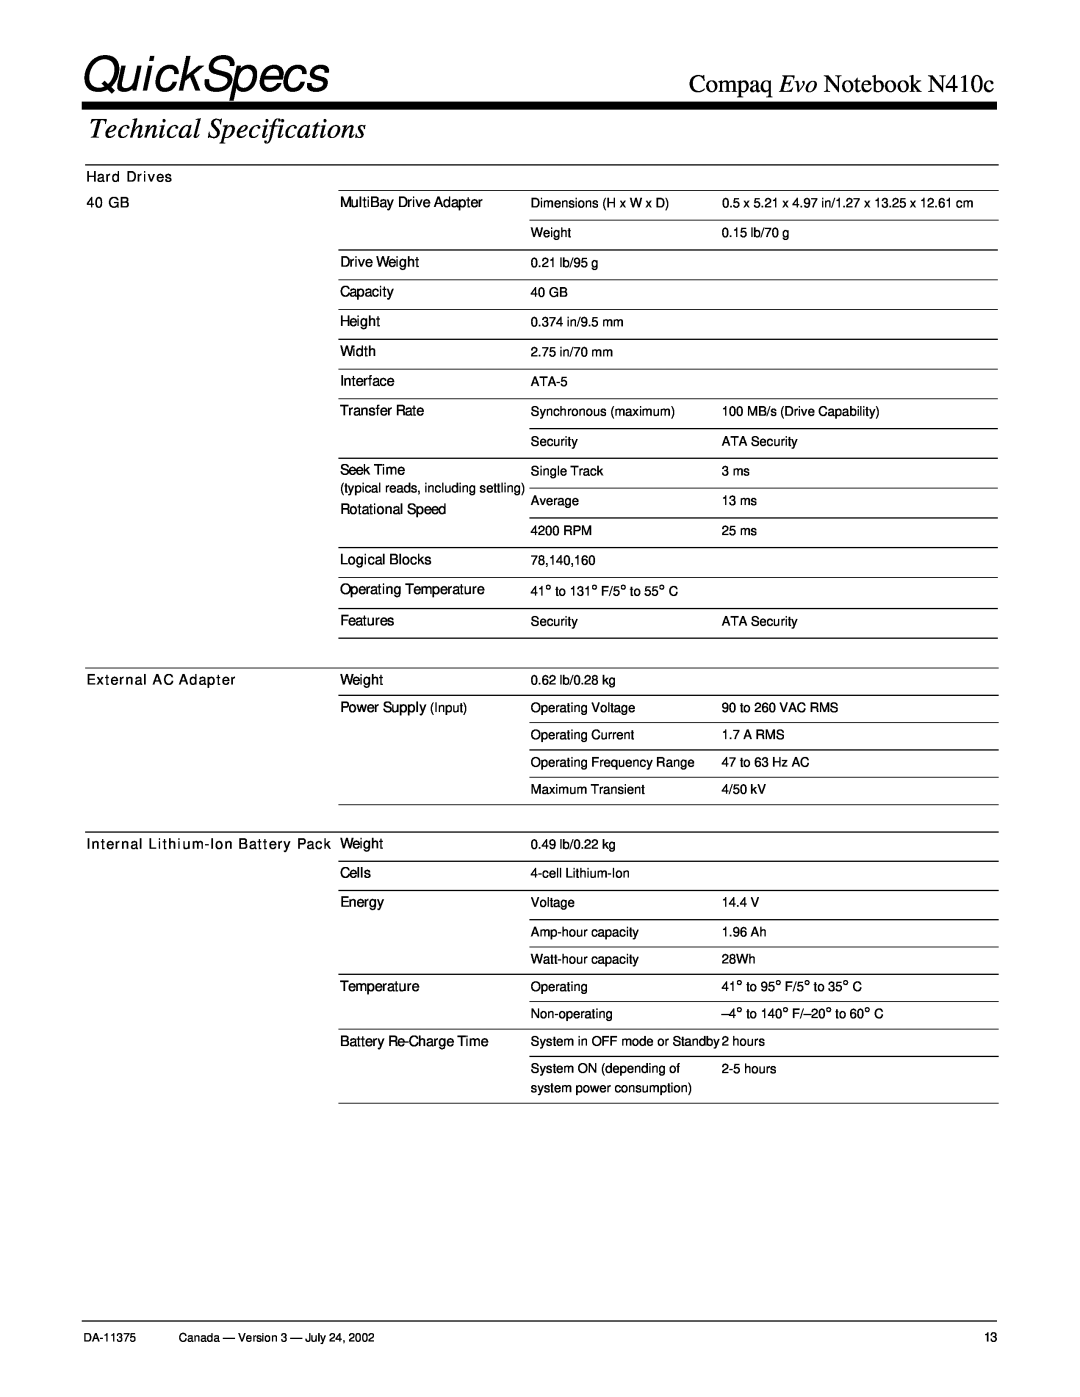 Compaq RJ-11 warranty QuickSpecs, Technical Specifications, Compaq Evo Notebook N410c 